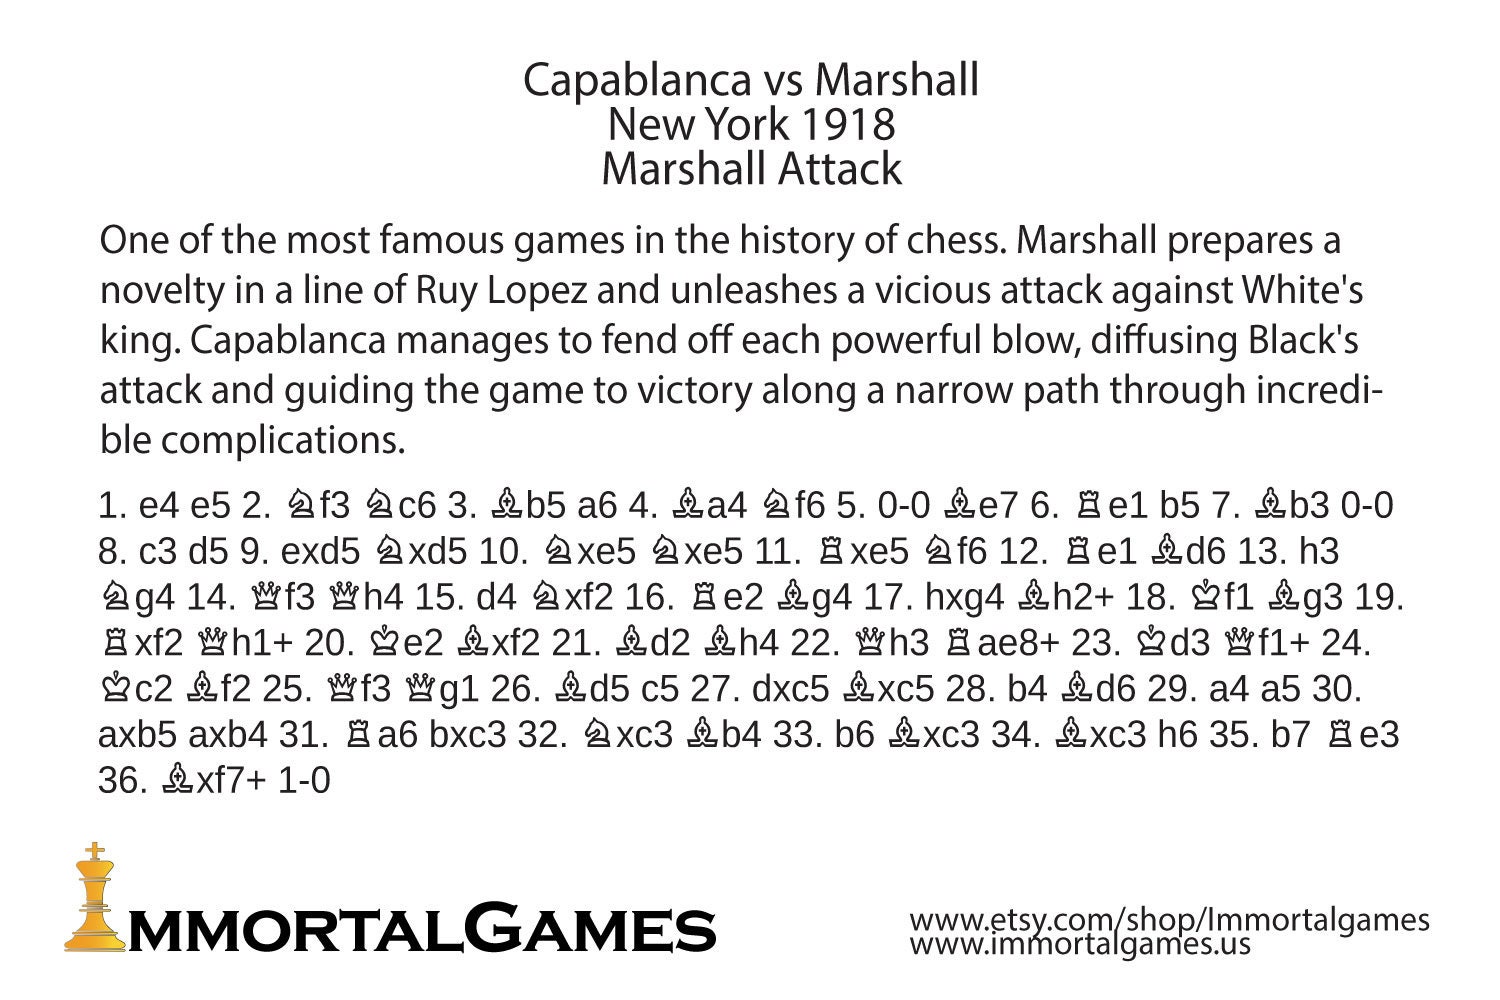 The Immortal Games of Capablanca